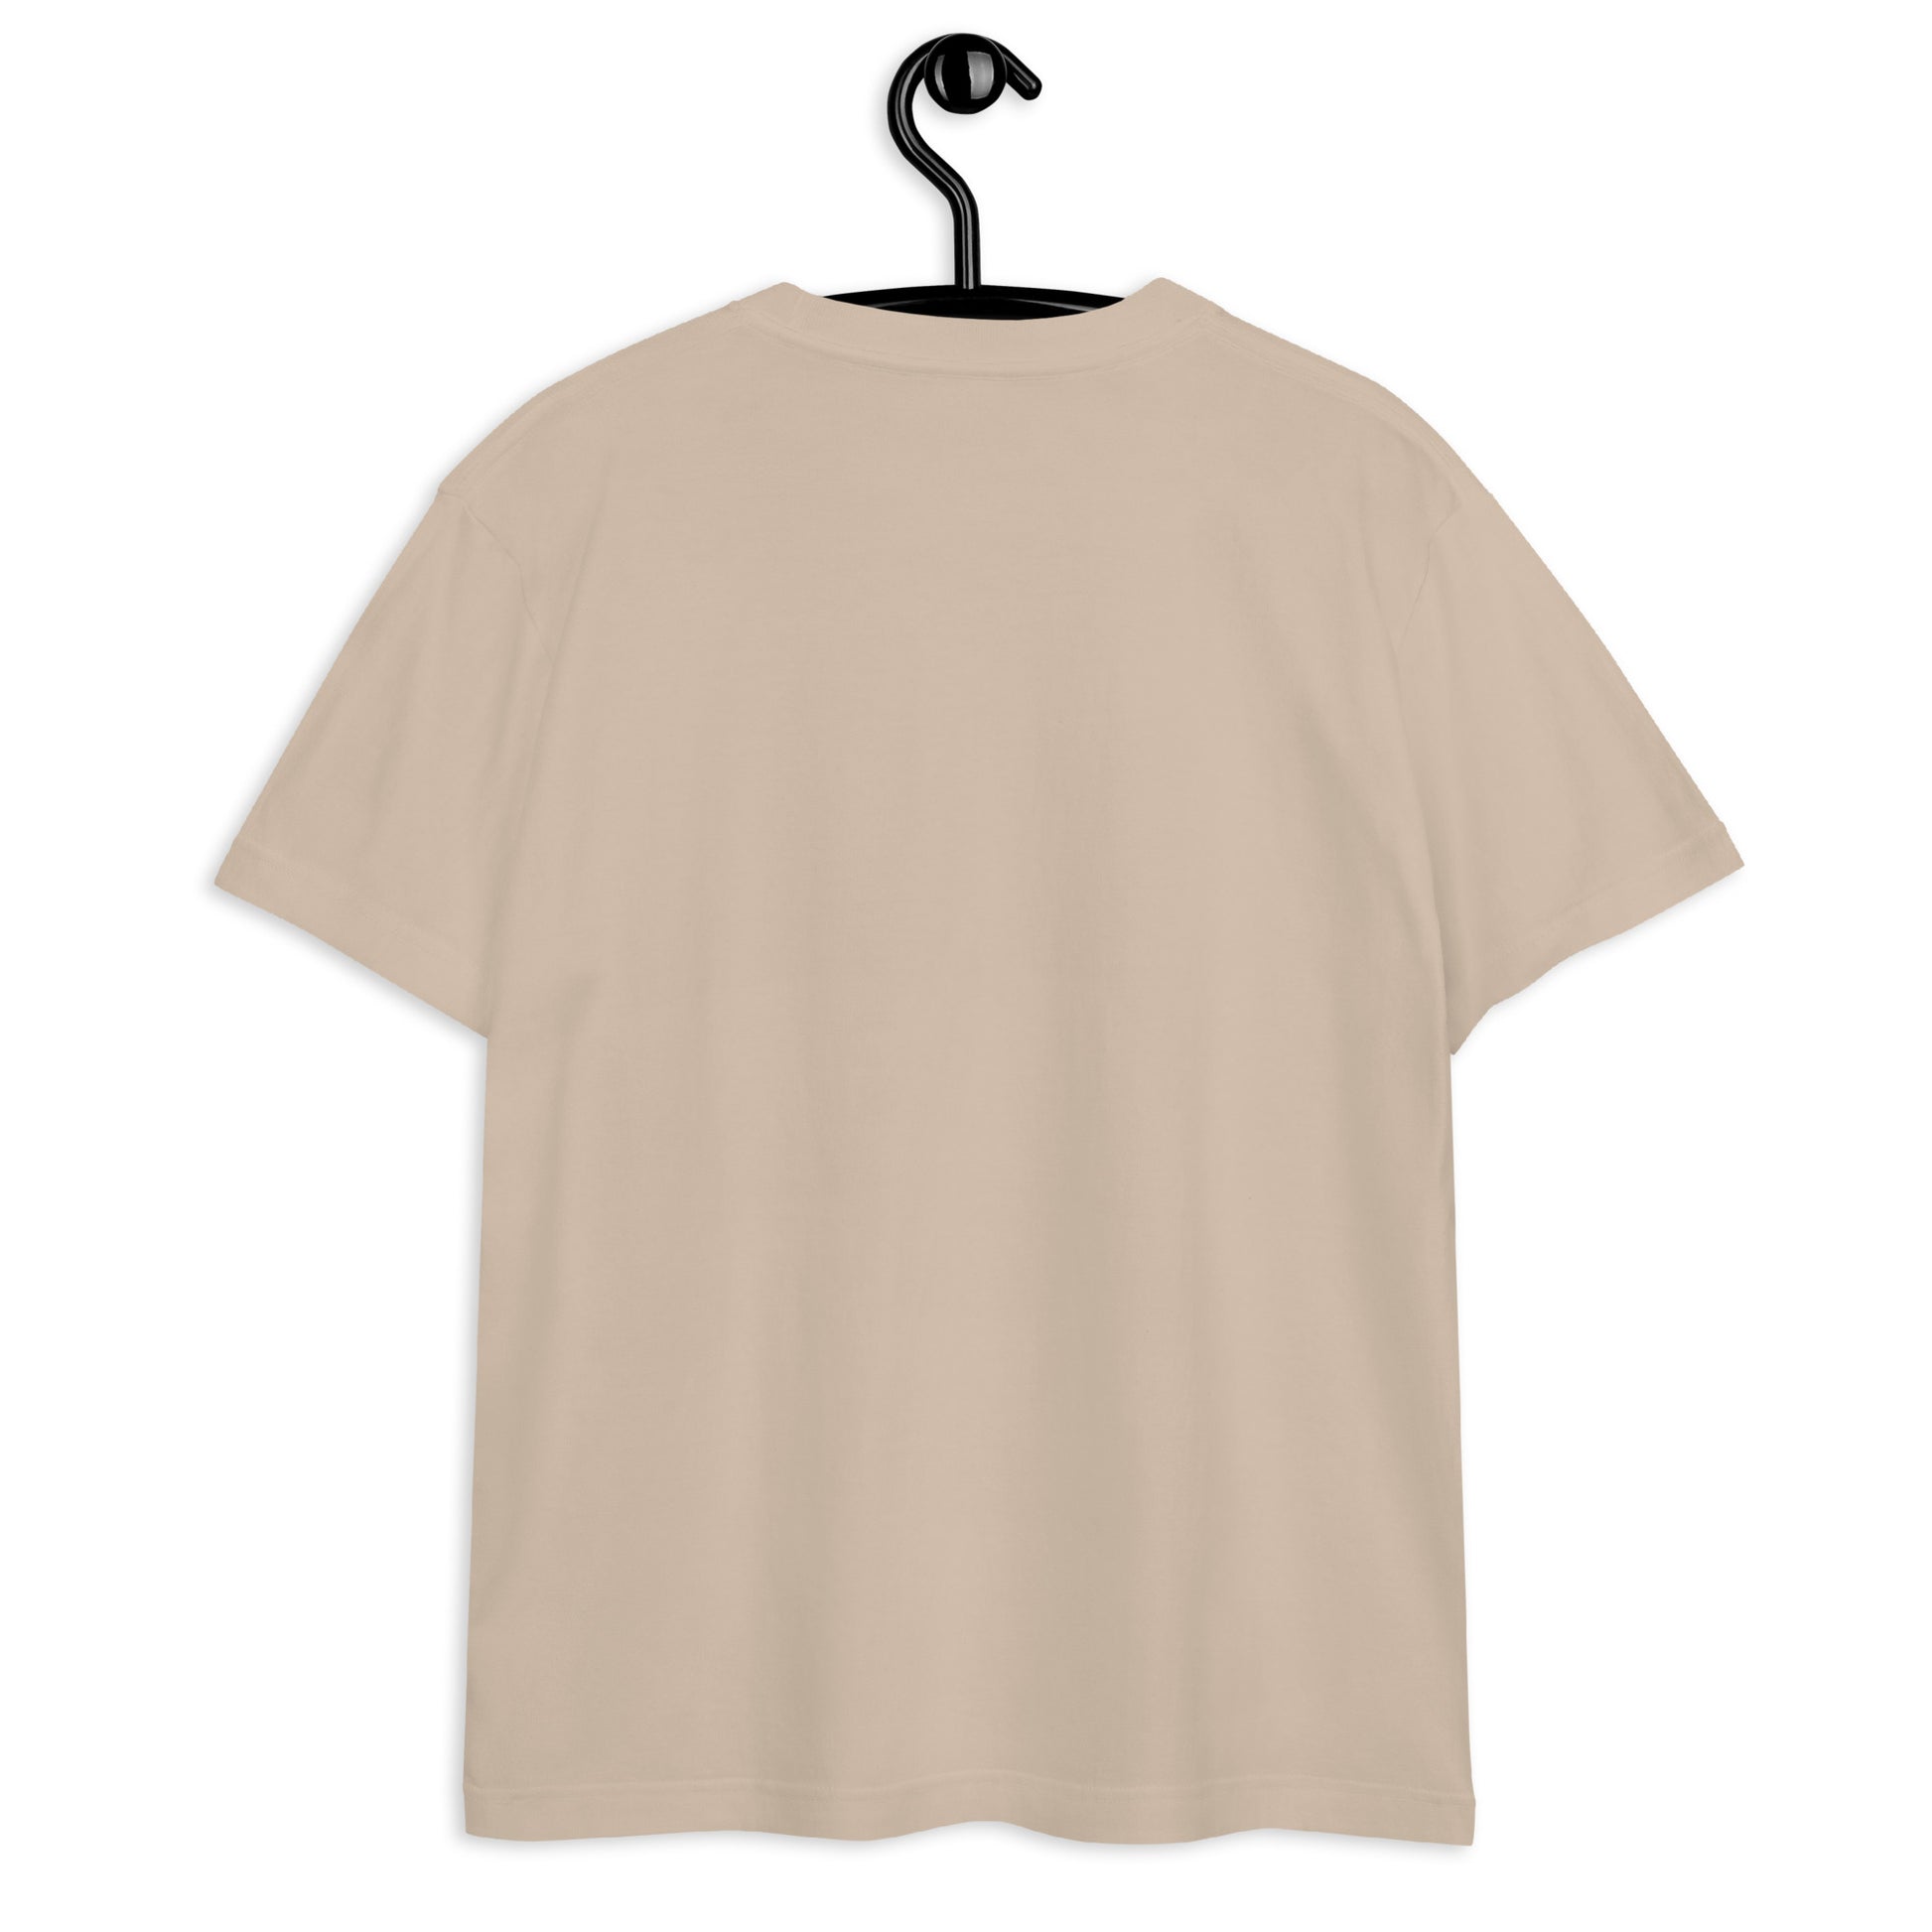 East Asia Unisex T-Shirt Japanese New Year 2023 | Online Clothing Shop